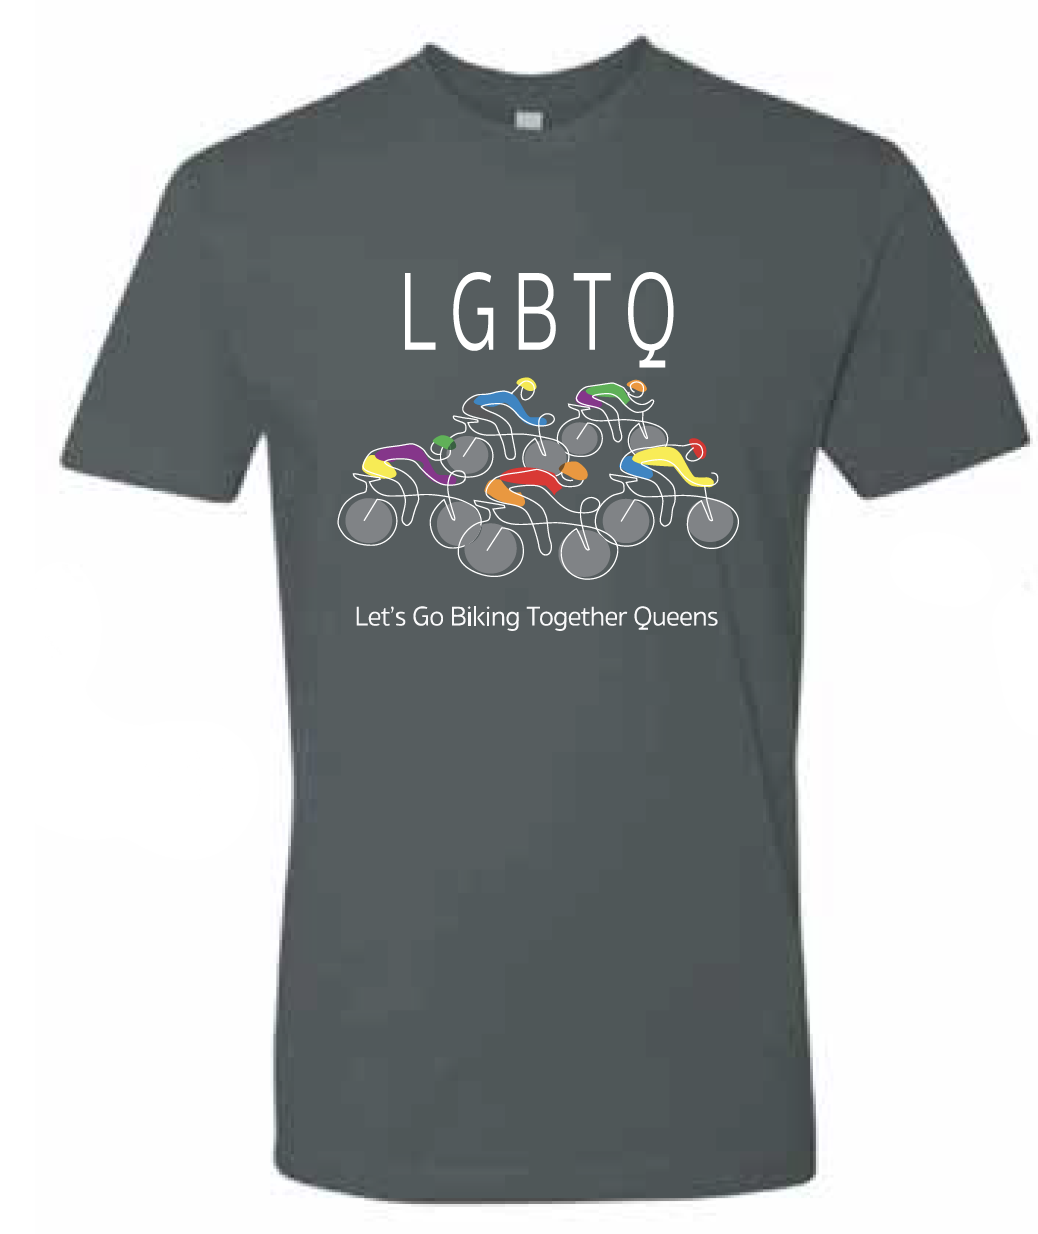 LGBTQ-let’s go biking together queens!